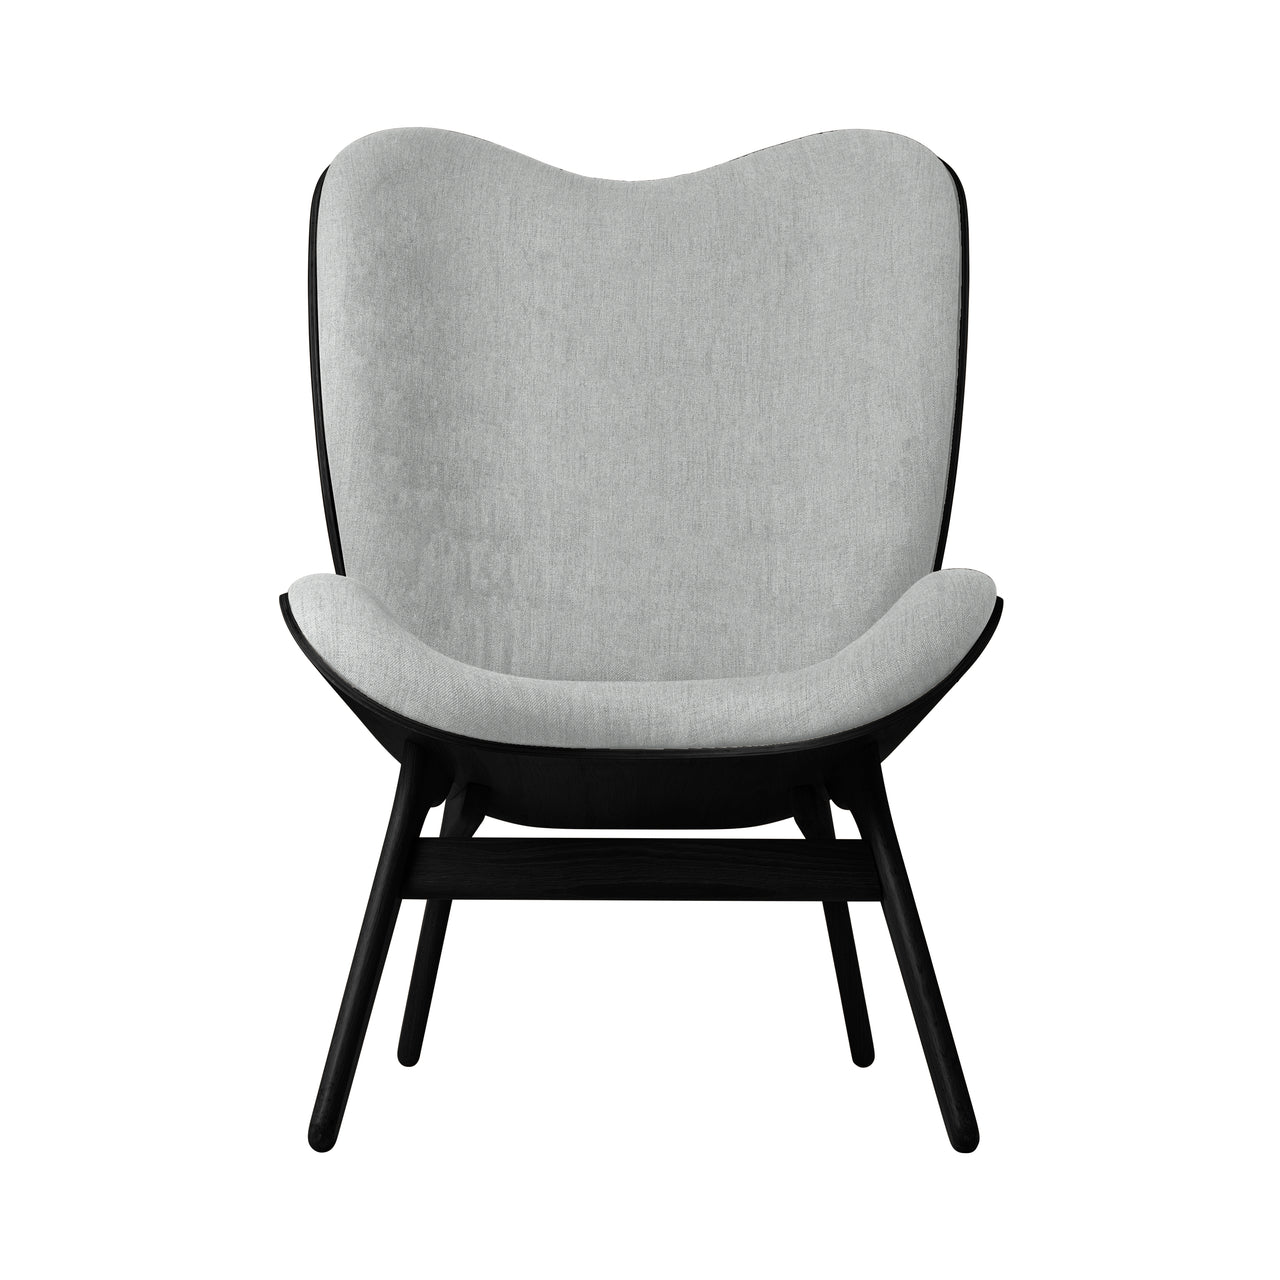 A Conversation Piece Lounge Chair: Tall + Black Oak + Sterling